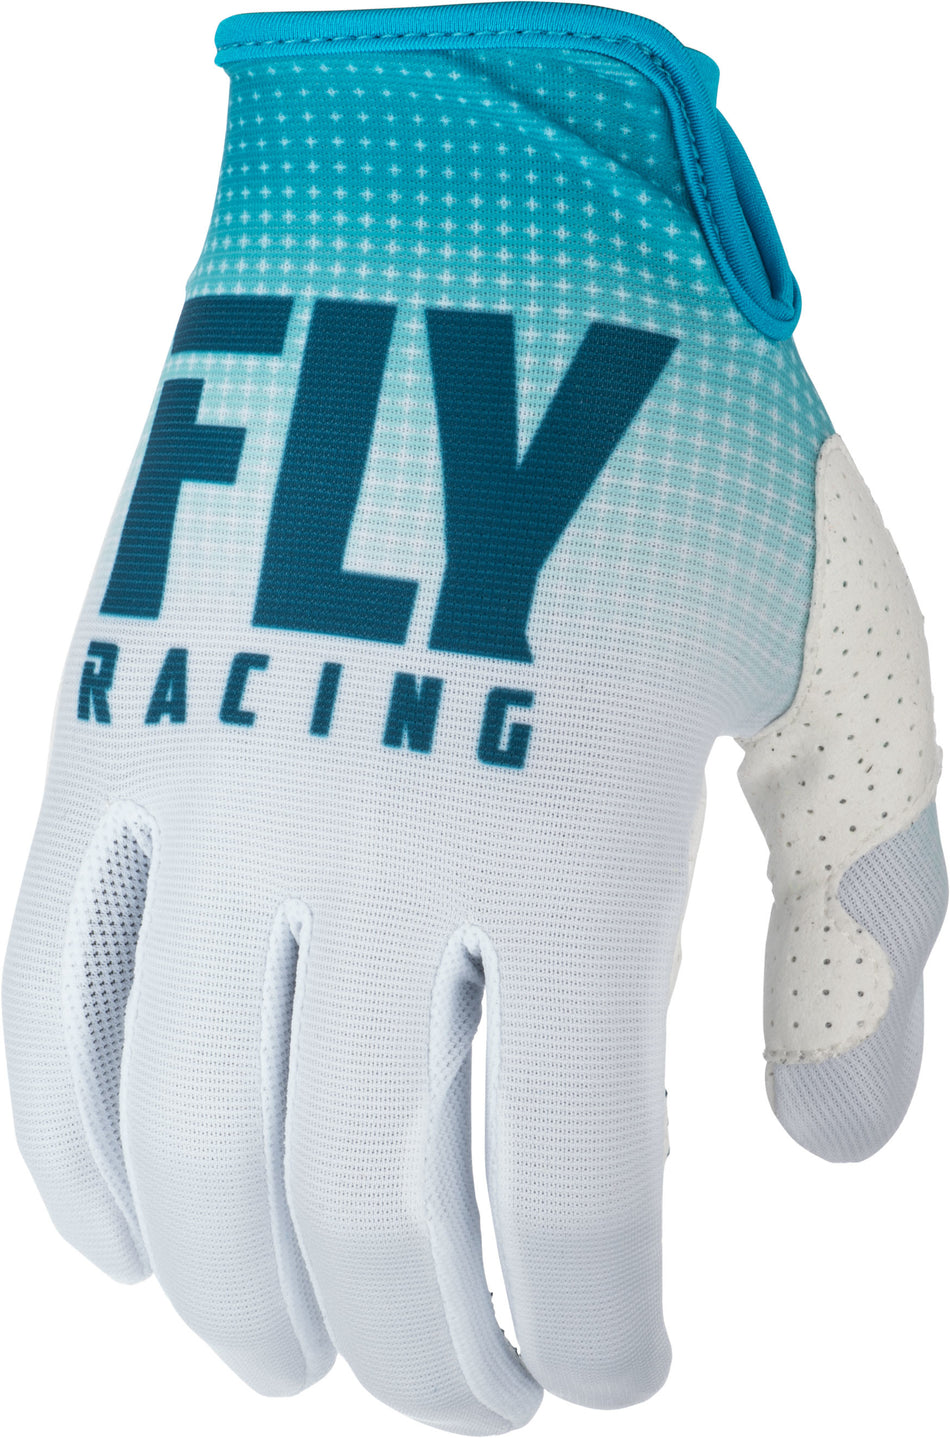 FLY RACING Lite Gloves Blue/White Sz 05 372-01105